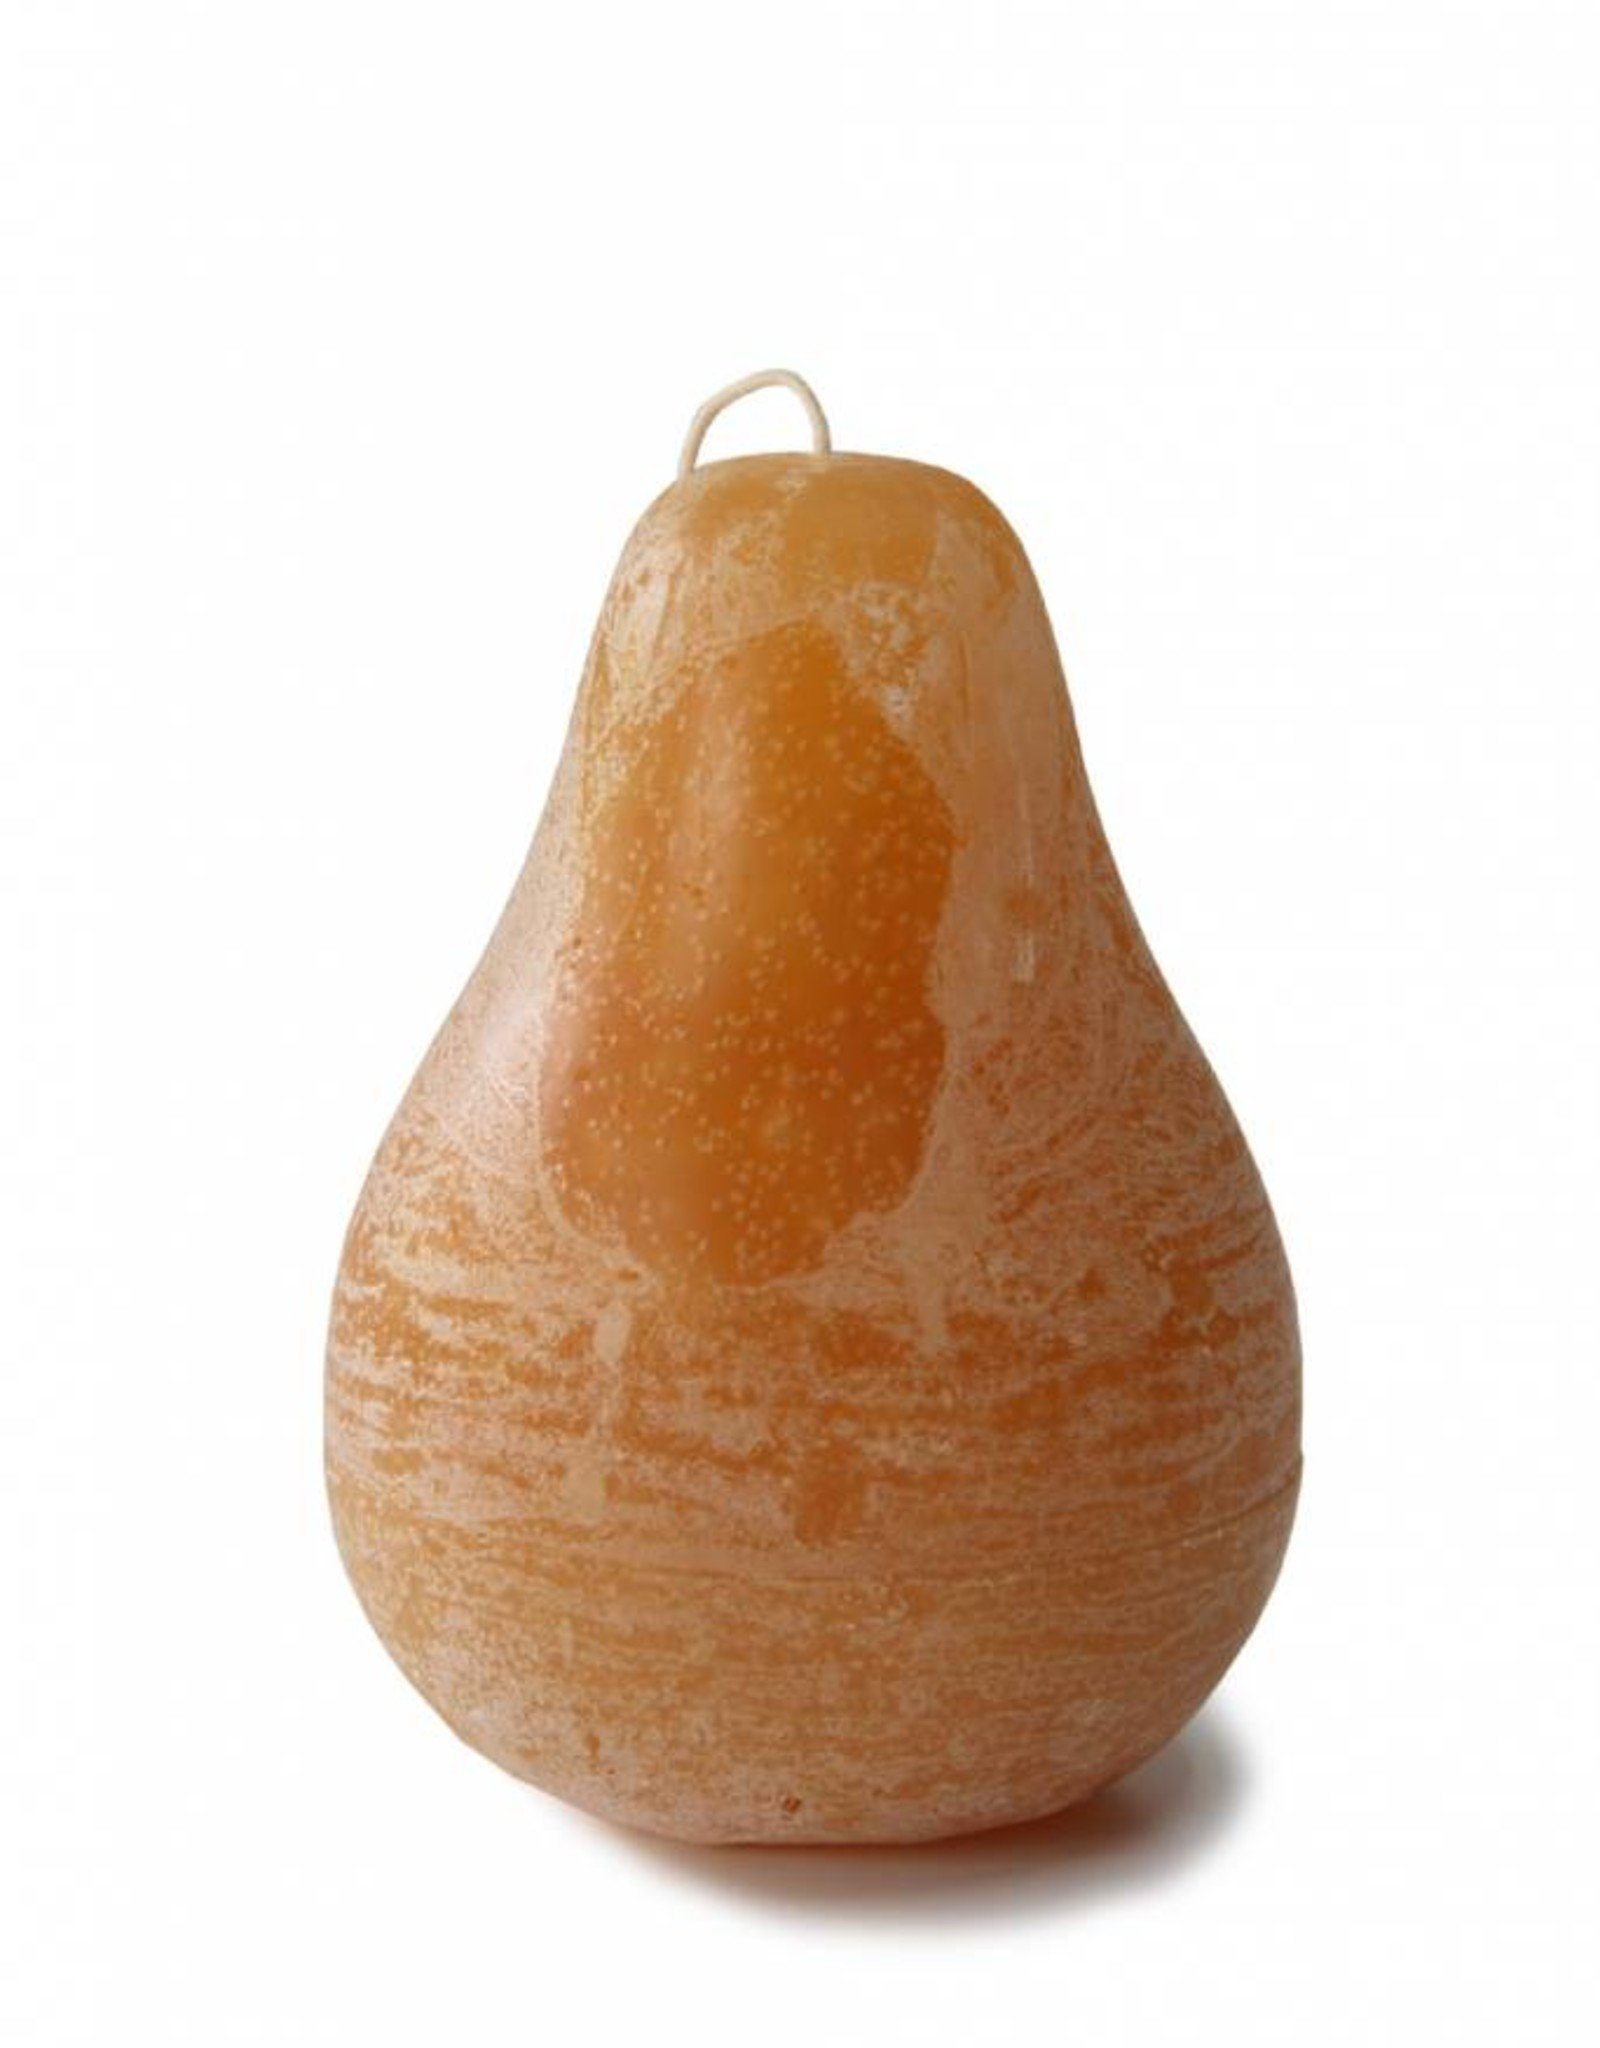 Timber Pear Brown Sugar 3 x 4 - Vance Kitira Candle